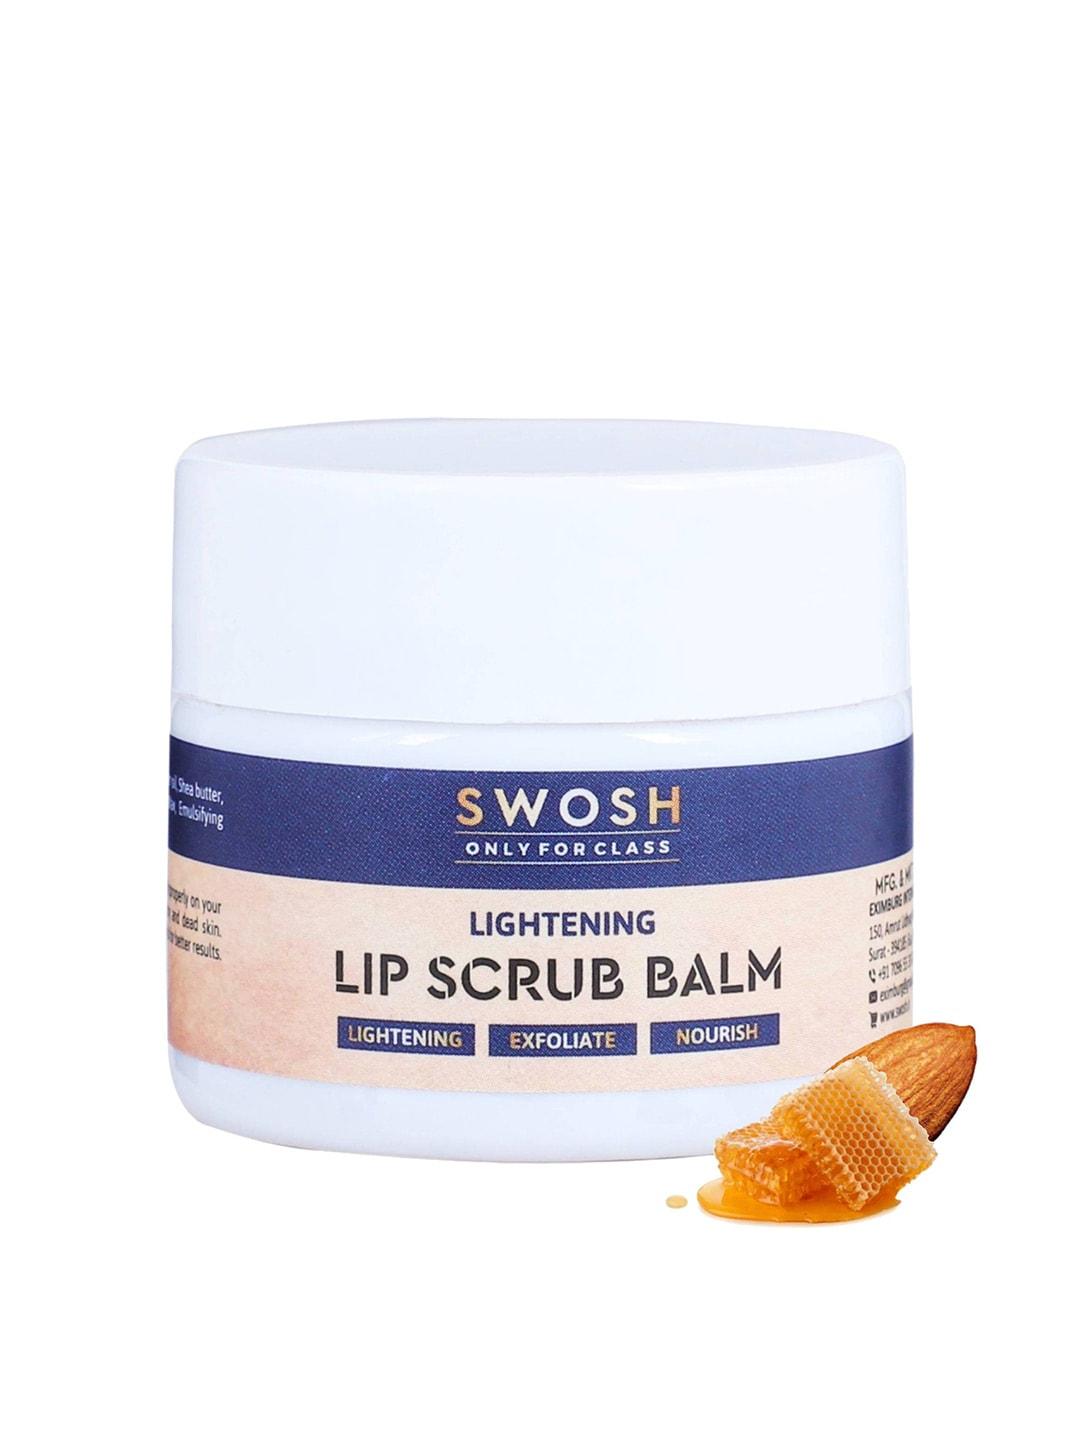 SWOSH Lip Scrub Balm For Lightening with Beeswax & Vitamin E - 20 gm